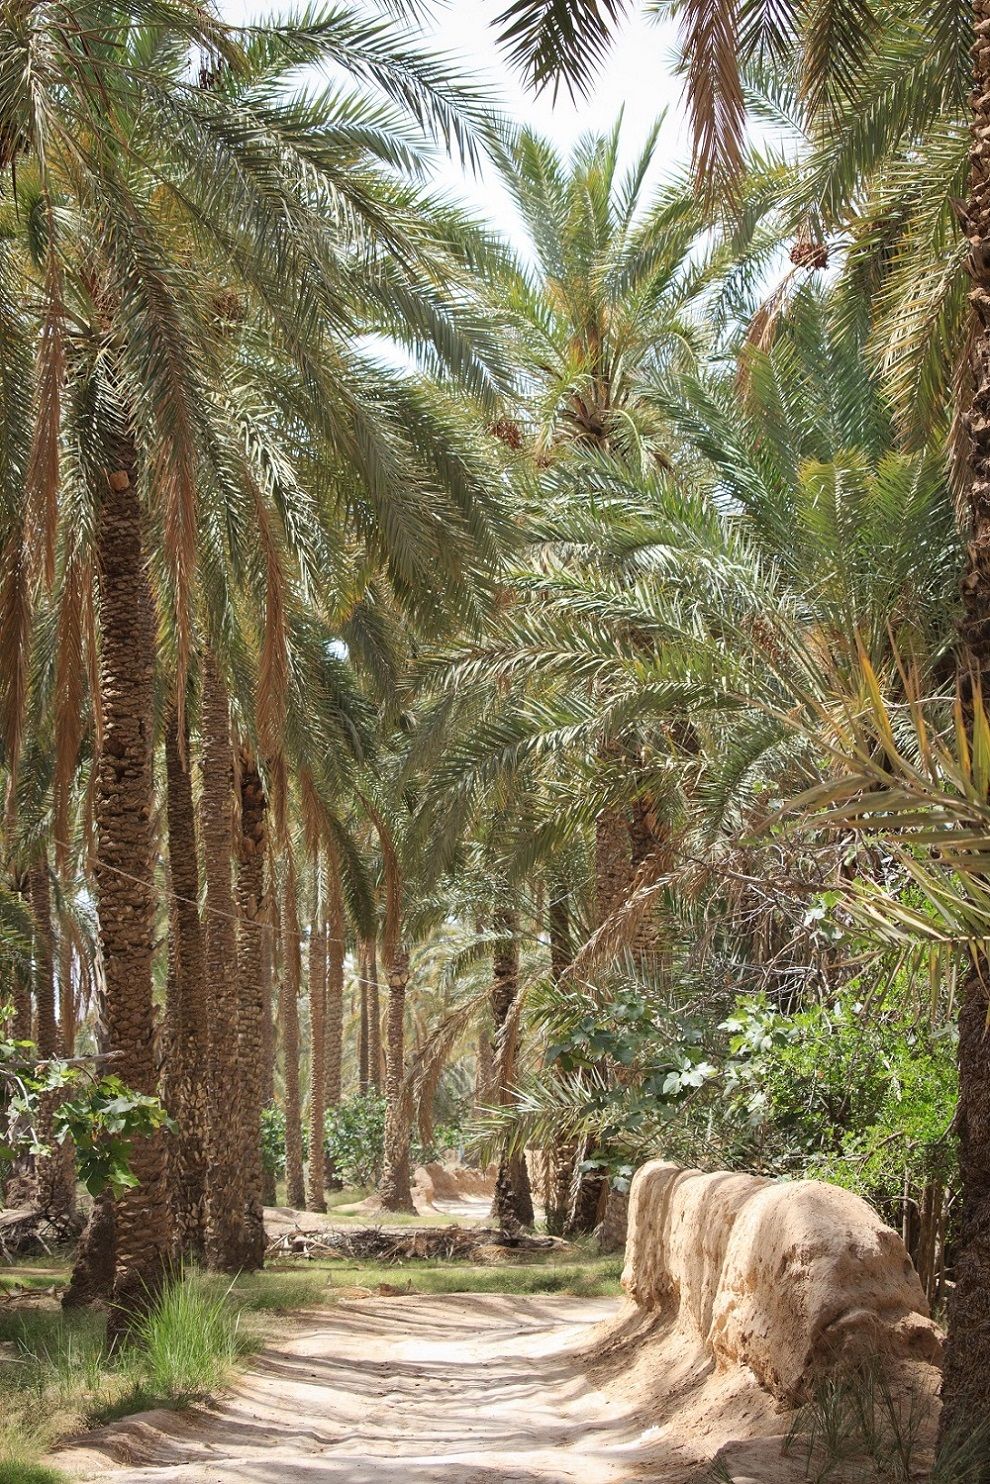 Tolga - Chemin dans la palmeraie